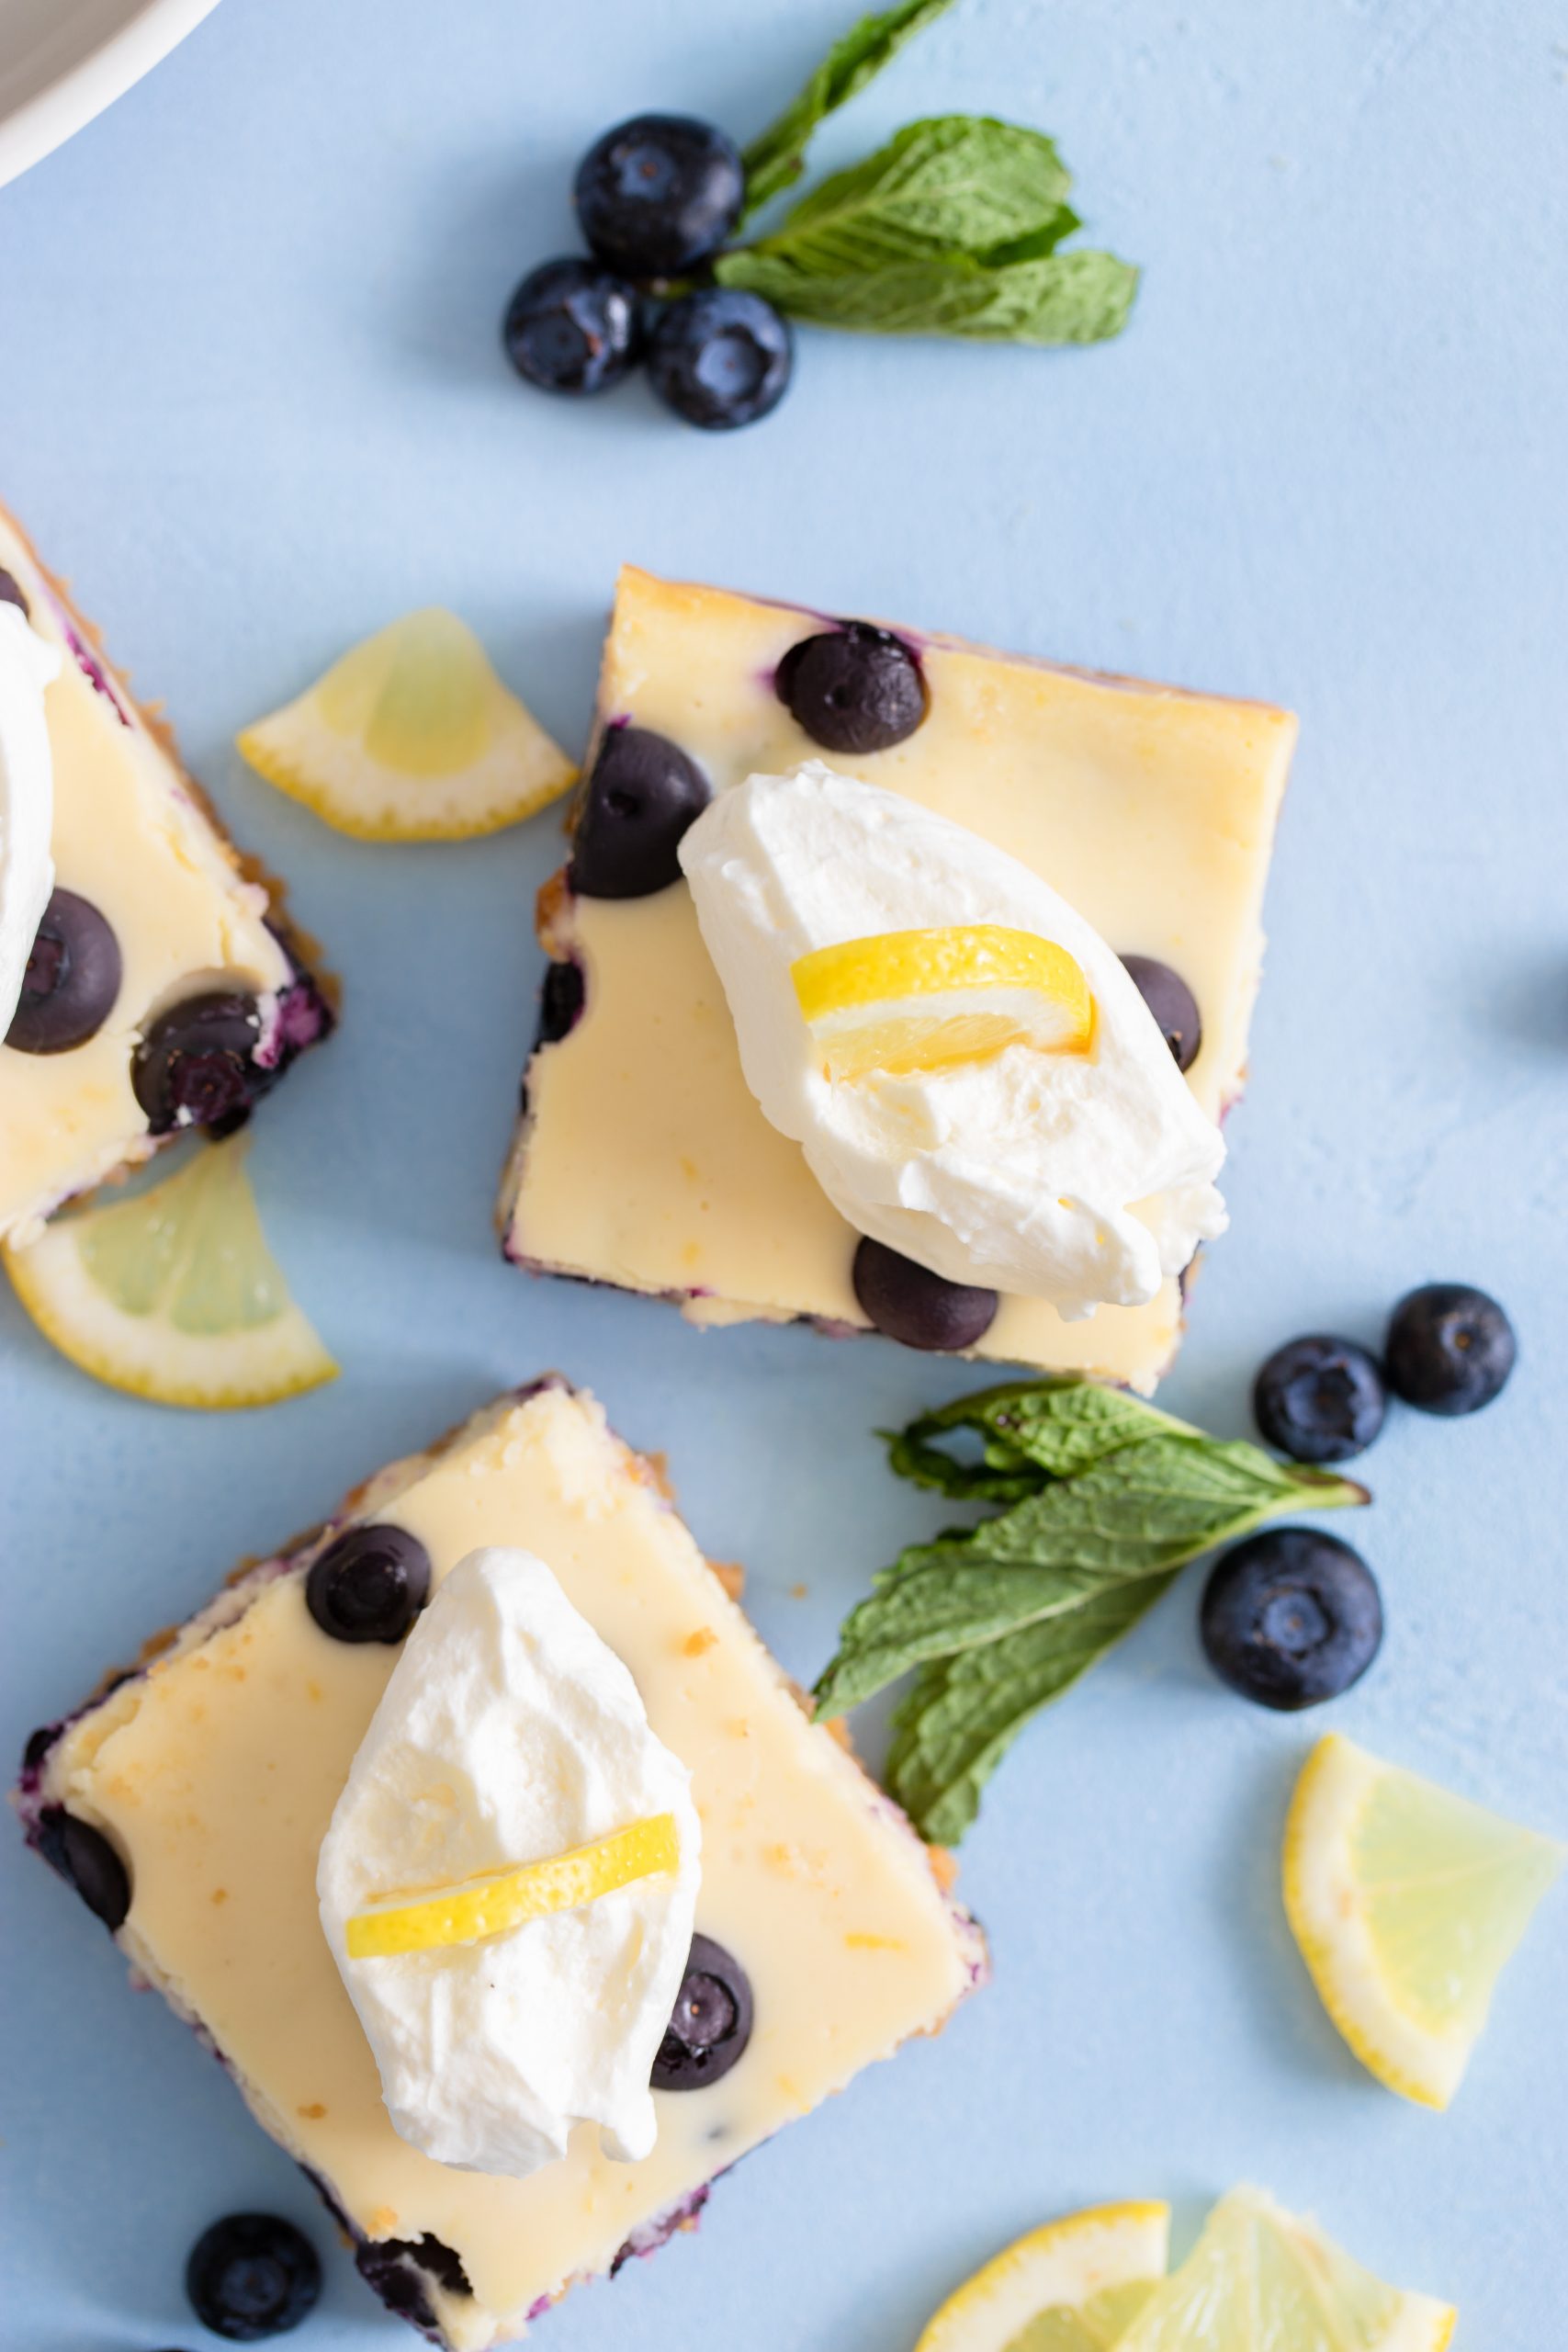 Lemon Blueberry Cheesecake Bars Recipe